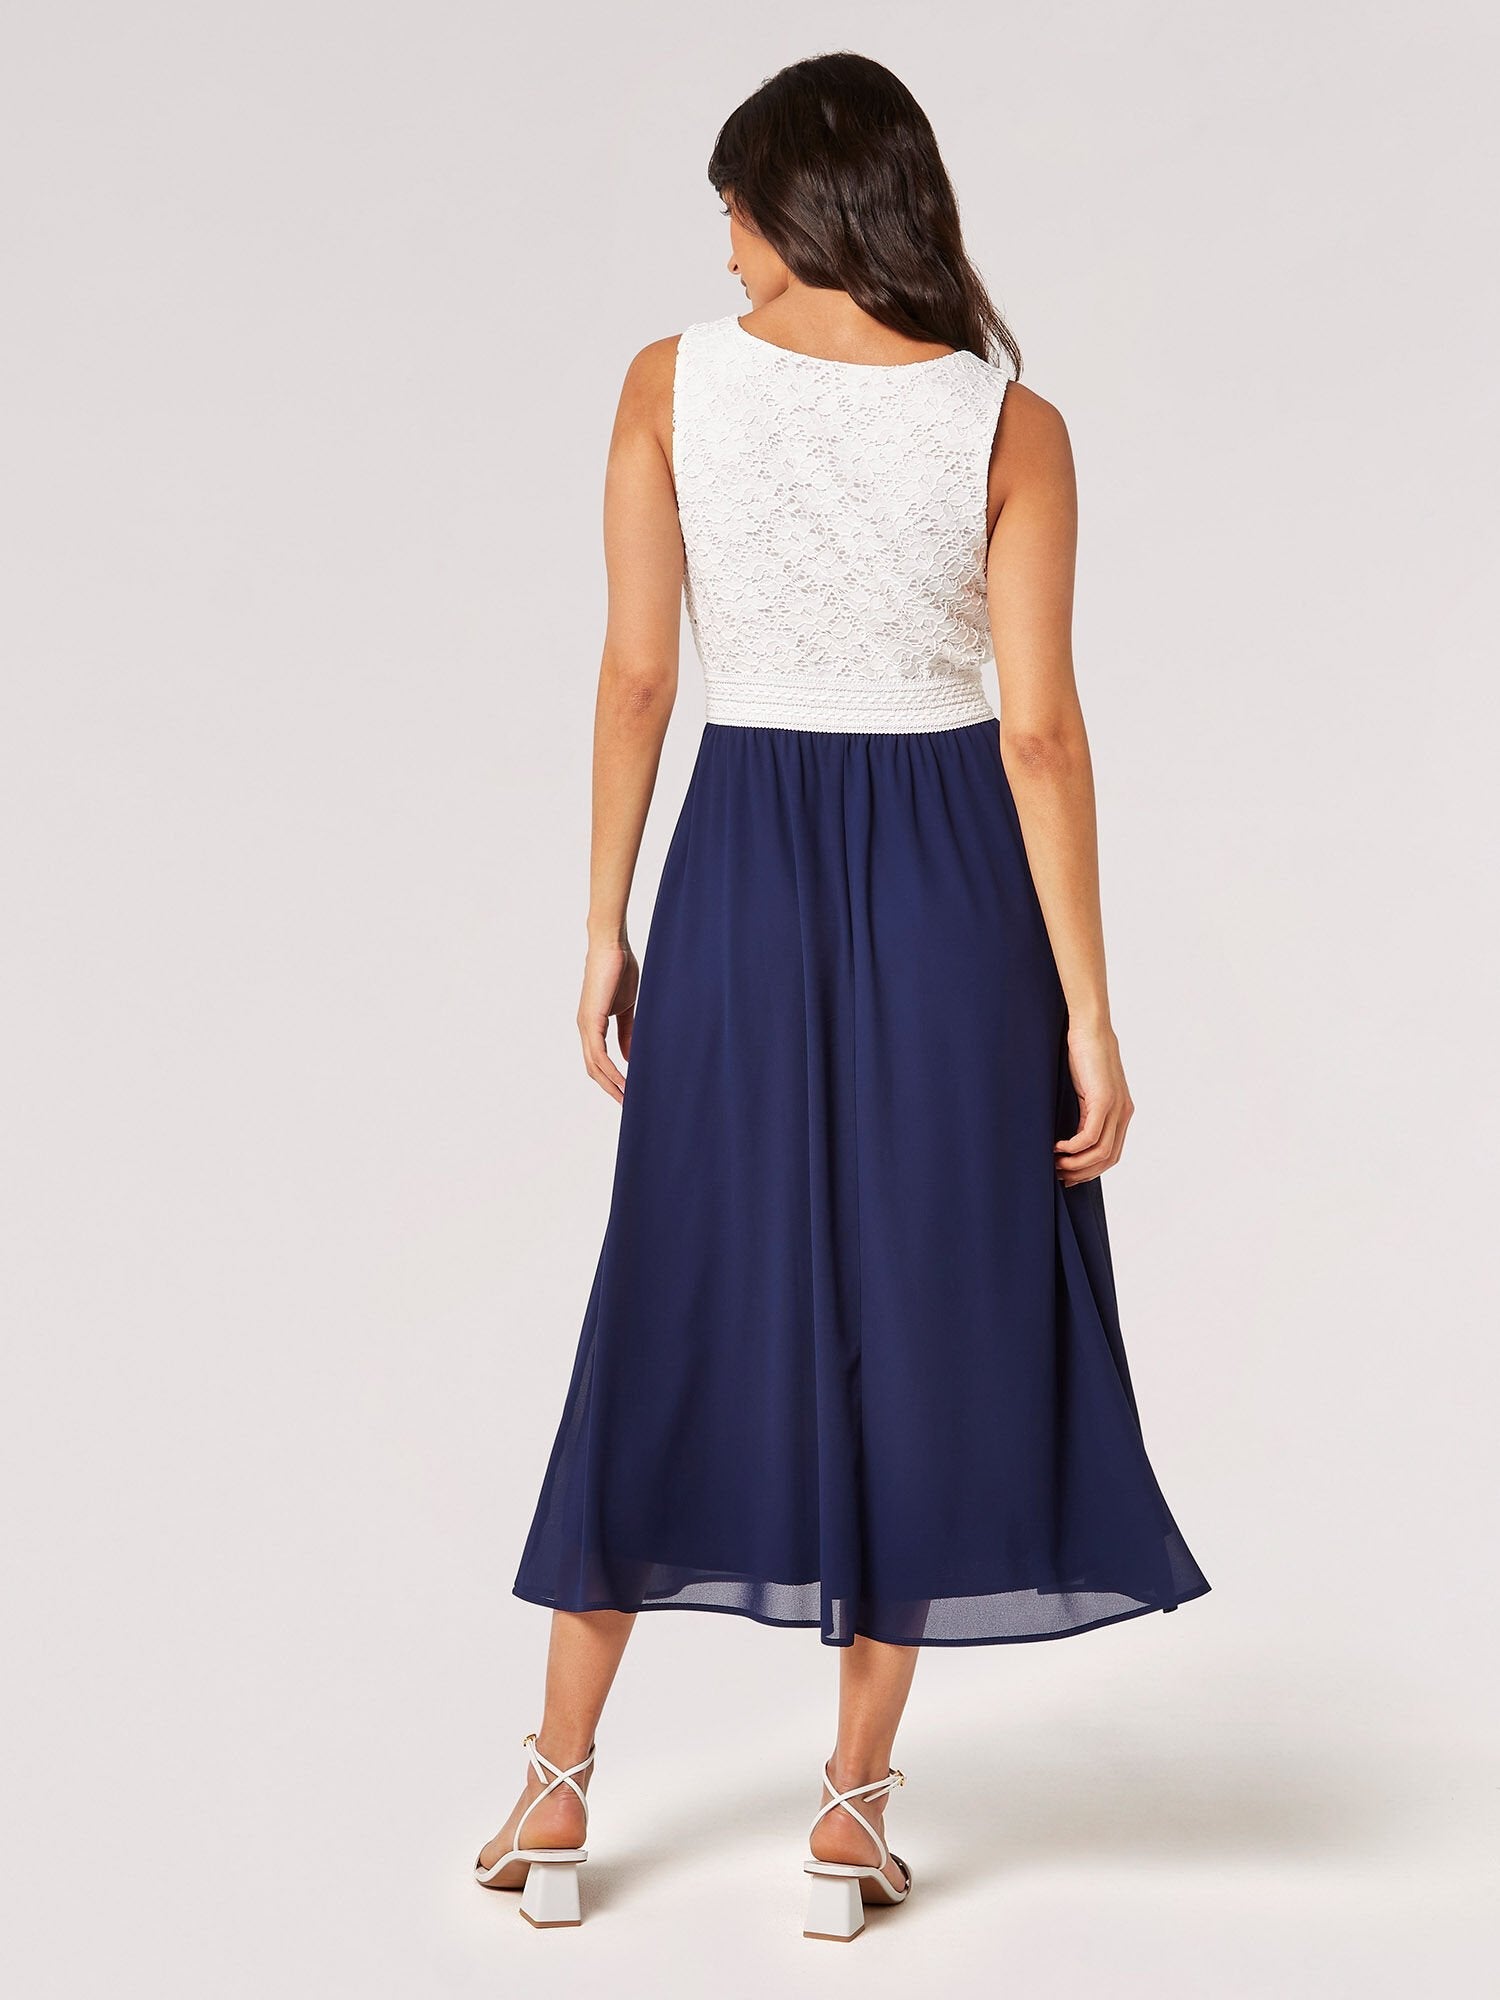 APRICOT - Lace And Chiffon Midi Dress - 841895 - Boutique Bubbles